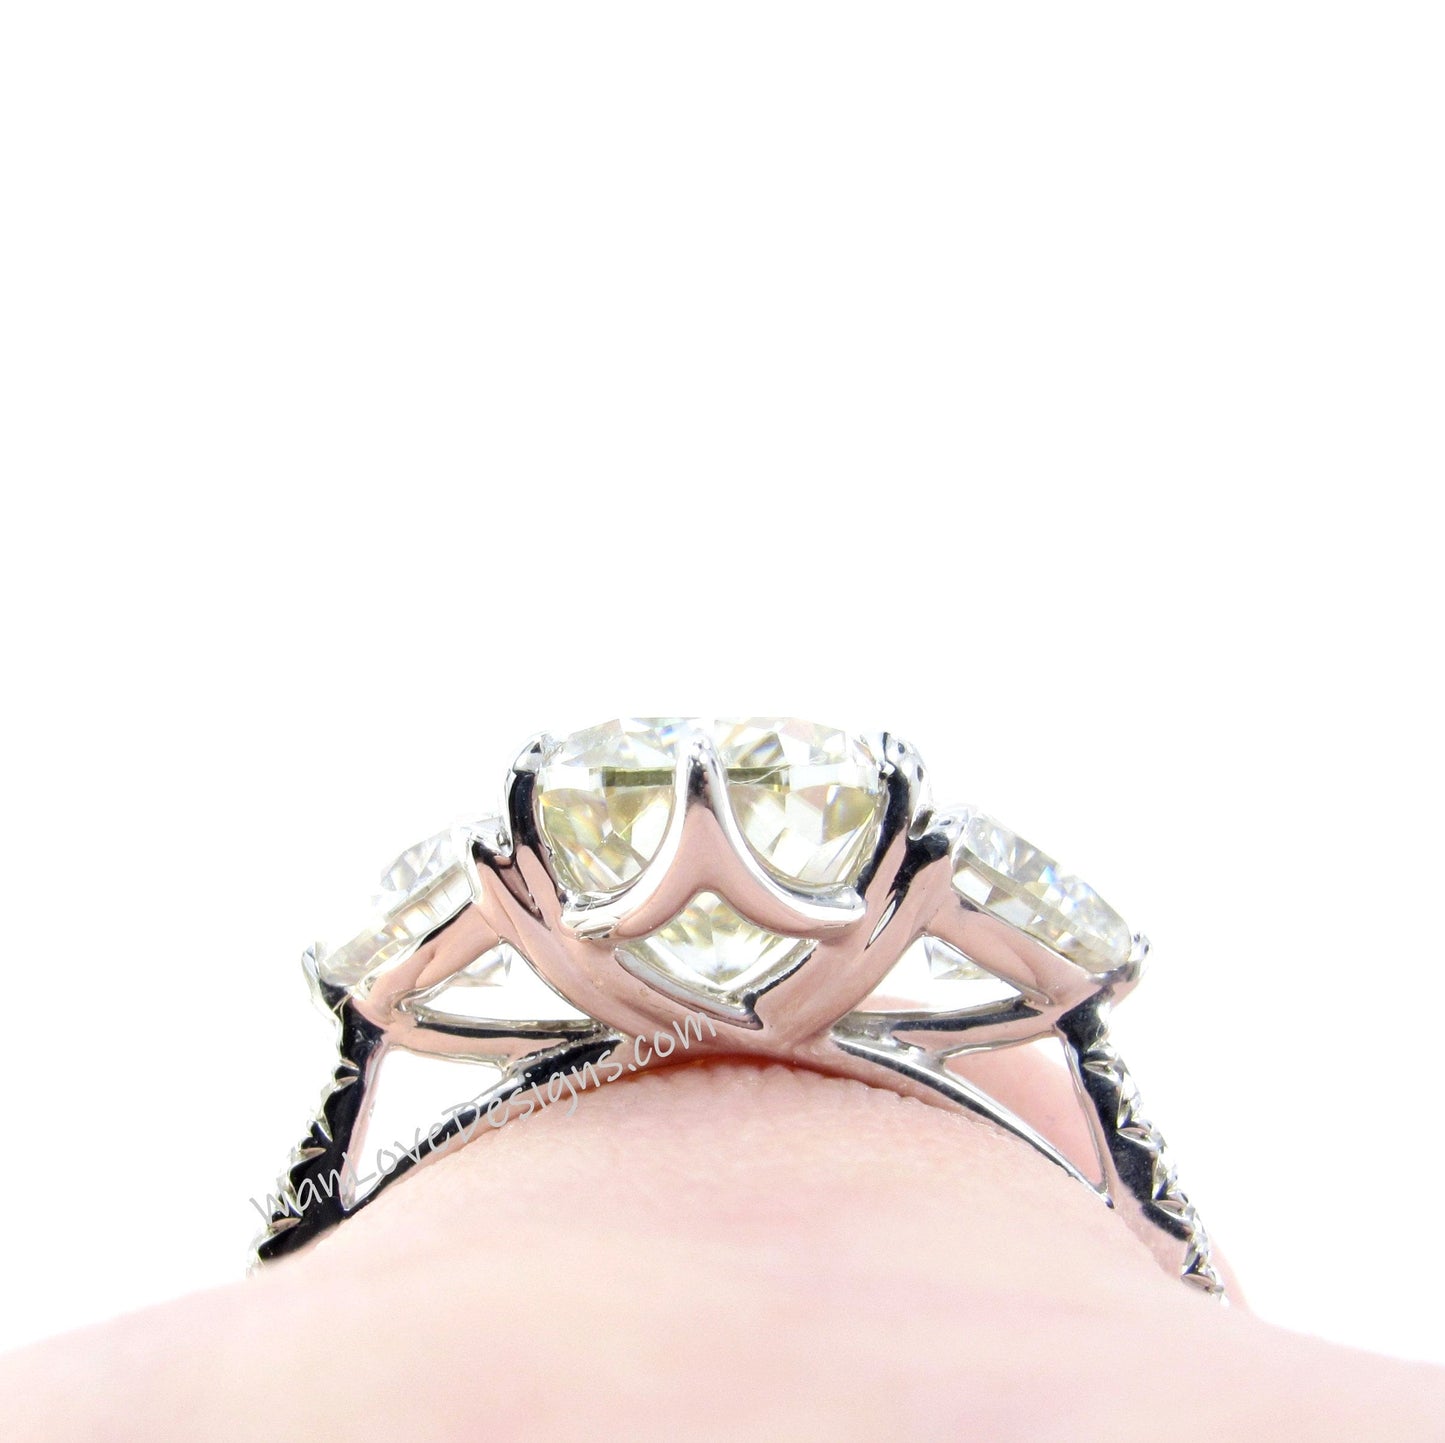 Emerald Moissanite Oval Trillion Engagement Ring, 3 Gem Stone, 4ct, 10x8mm, Custom, Wedding, Anniversary Gift,14k 18k White Rose Yellow Gold Wan Love Designs